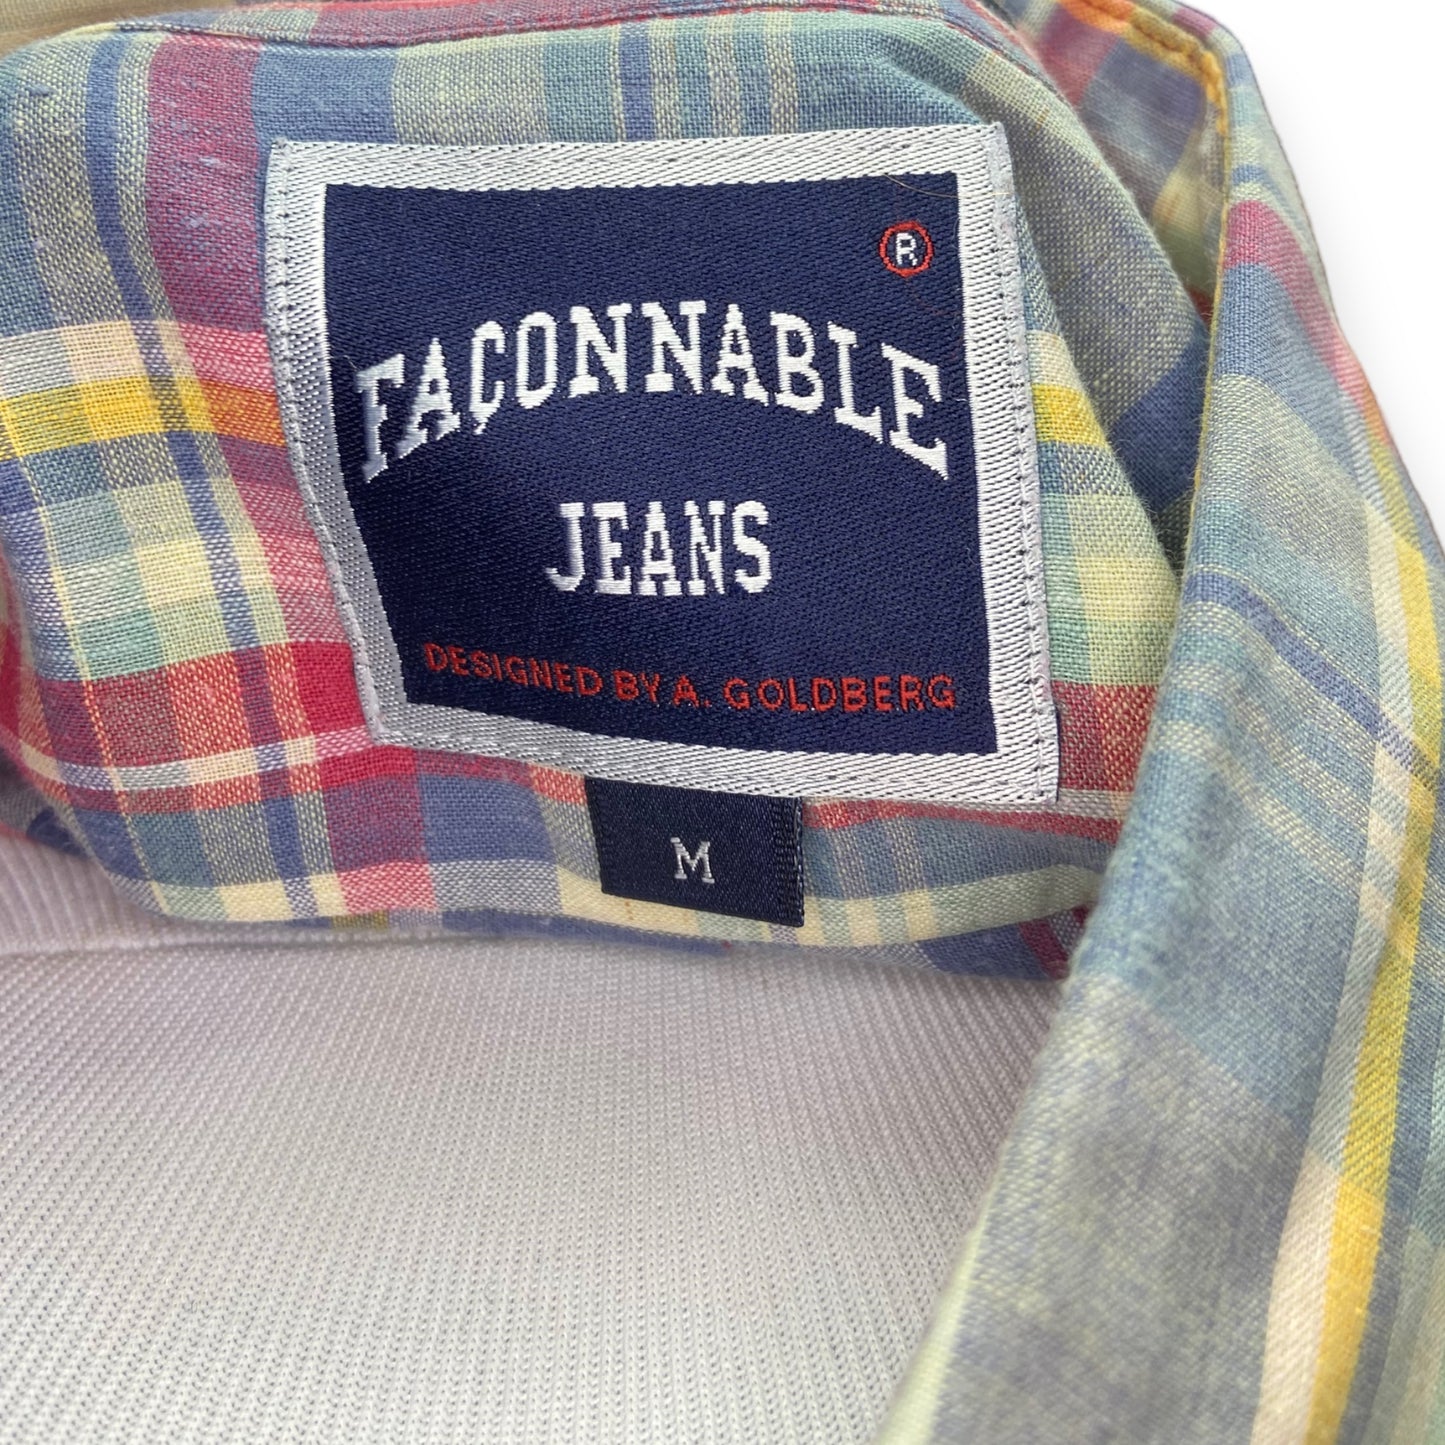 Faconnable Jeans Multi Colored Plaid Button Down Shirt (Size M)